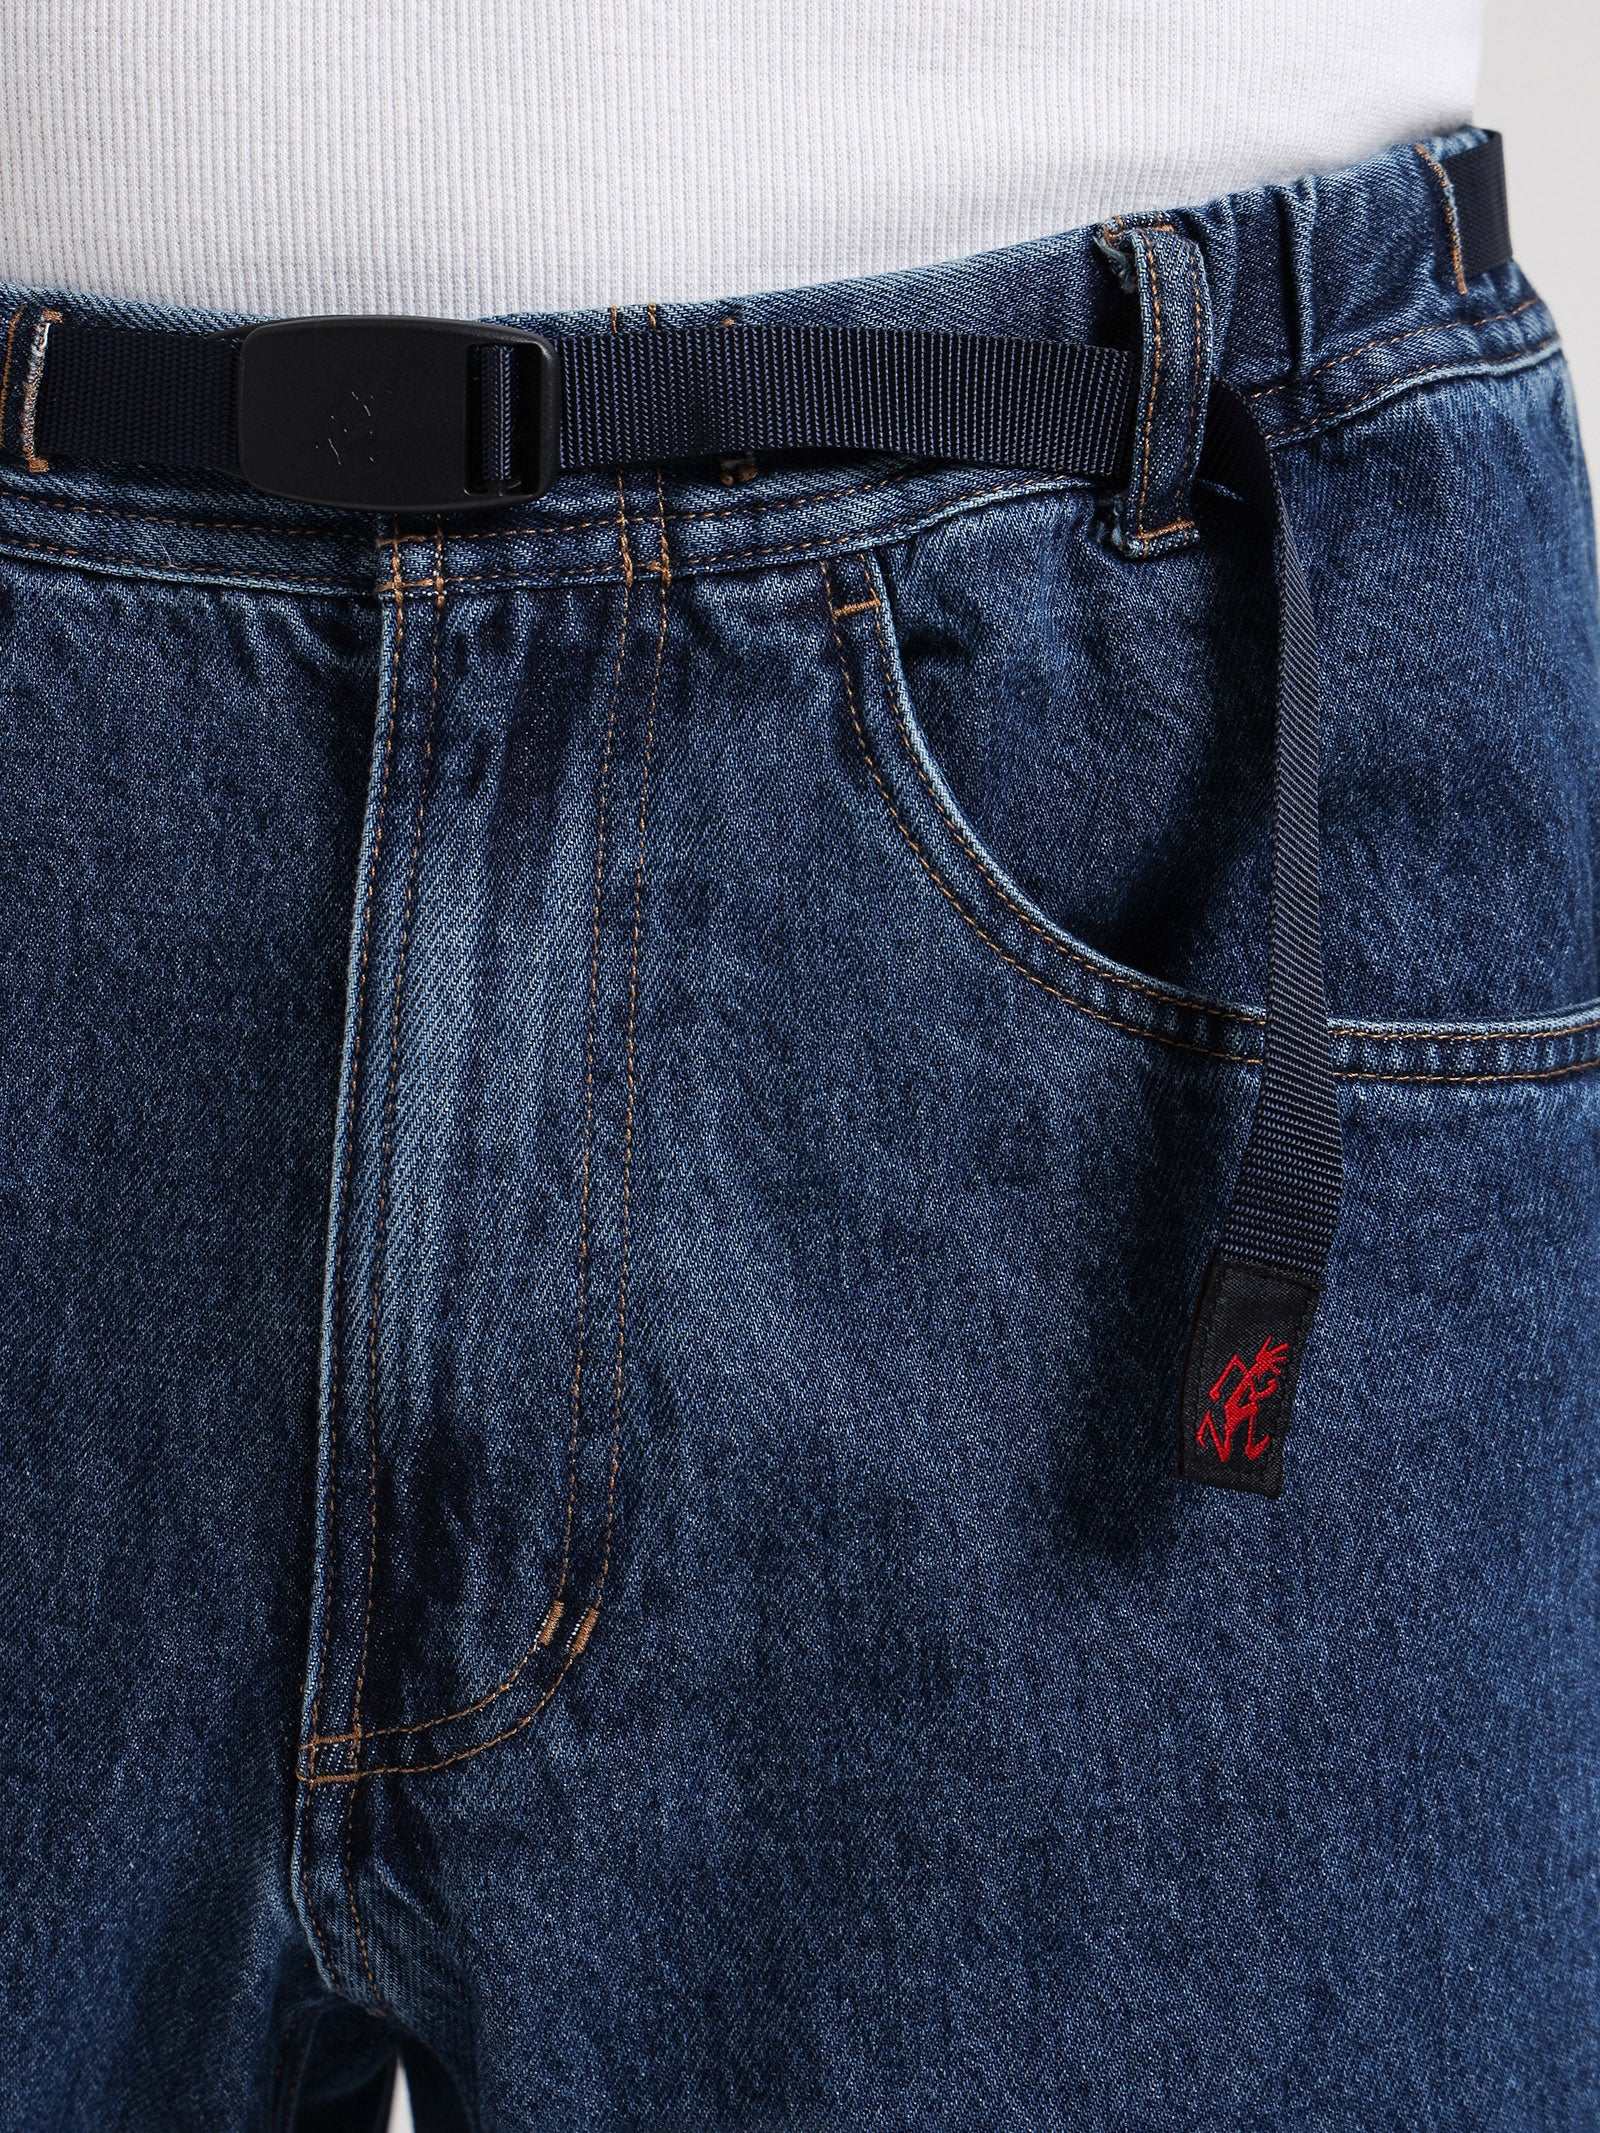 Rock Slide Jeans in Mid Indigo Blue